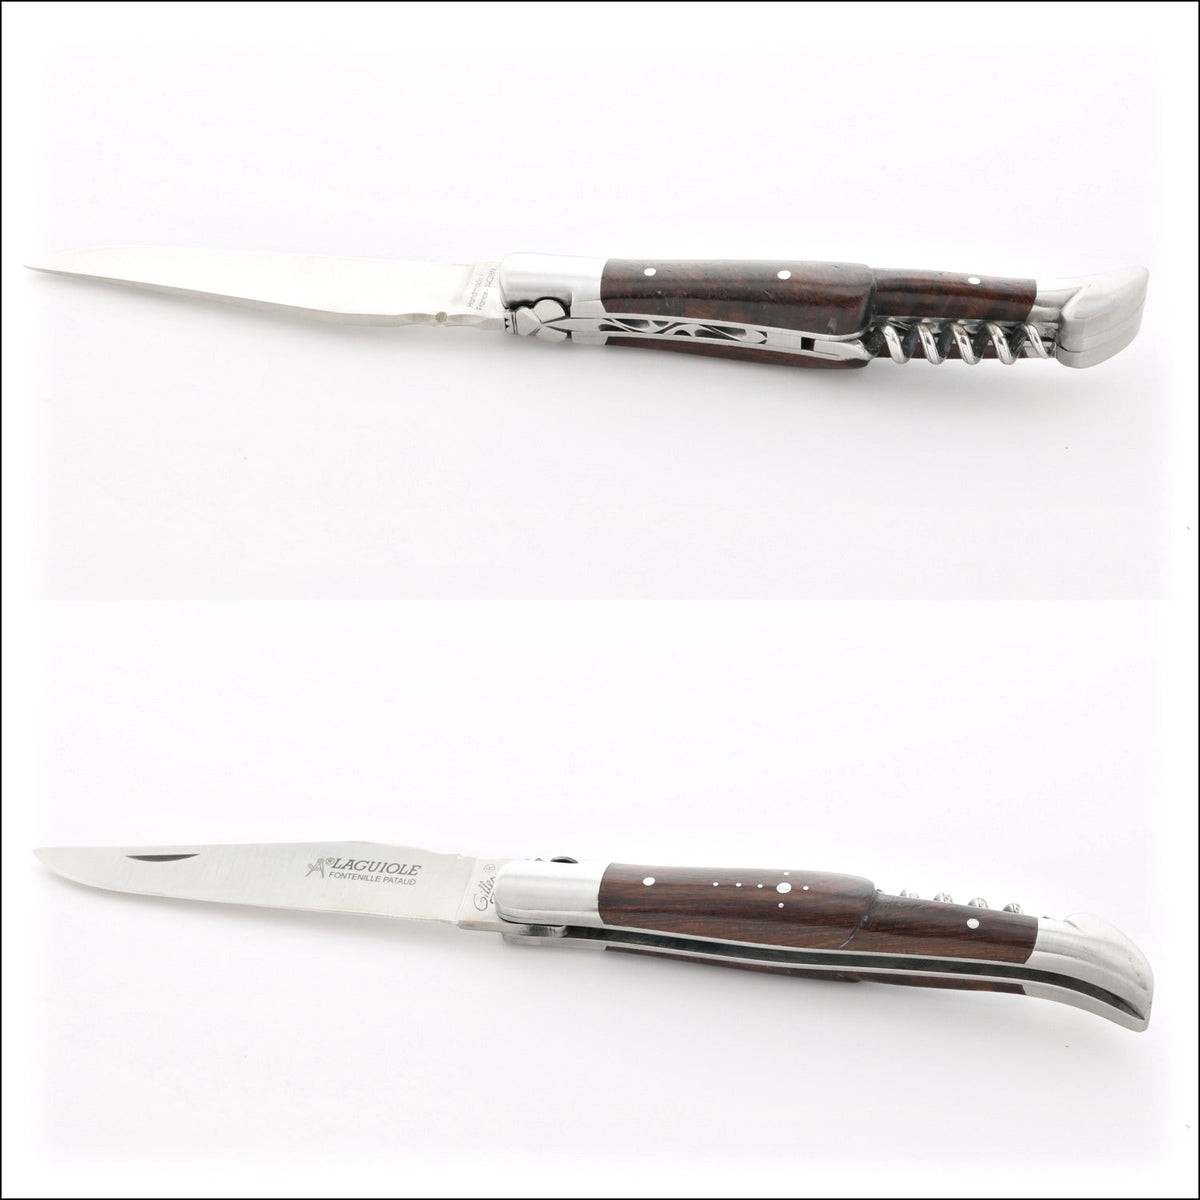 Classic Laguiole Corkscrew Knife Ironwood Handle